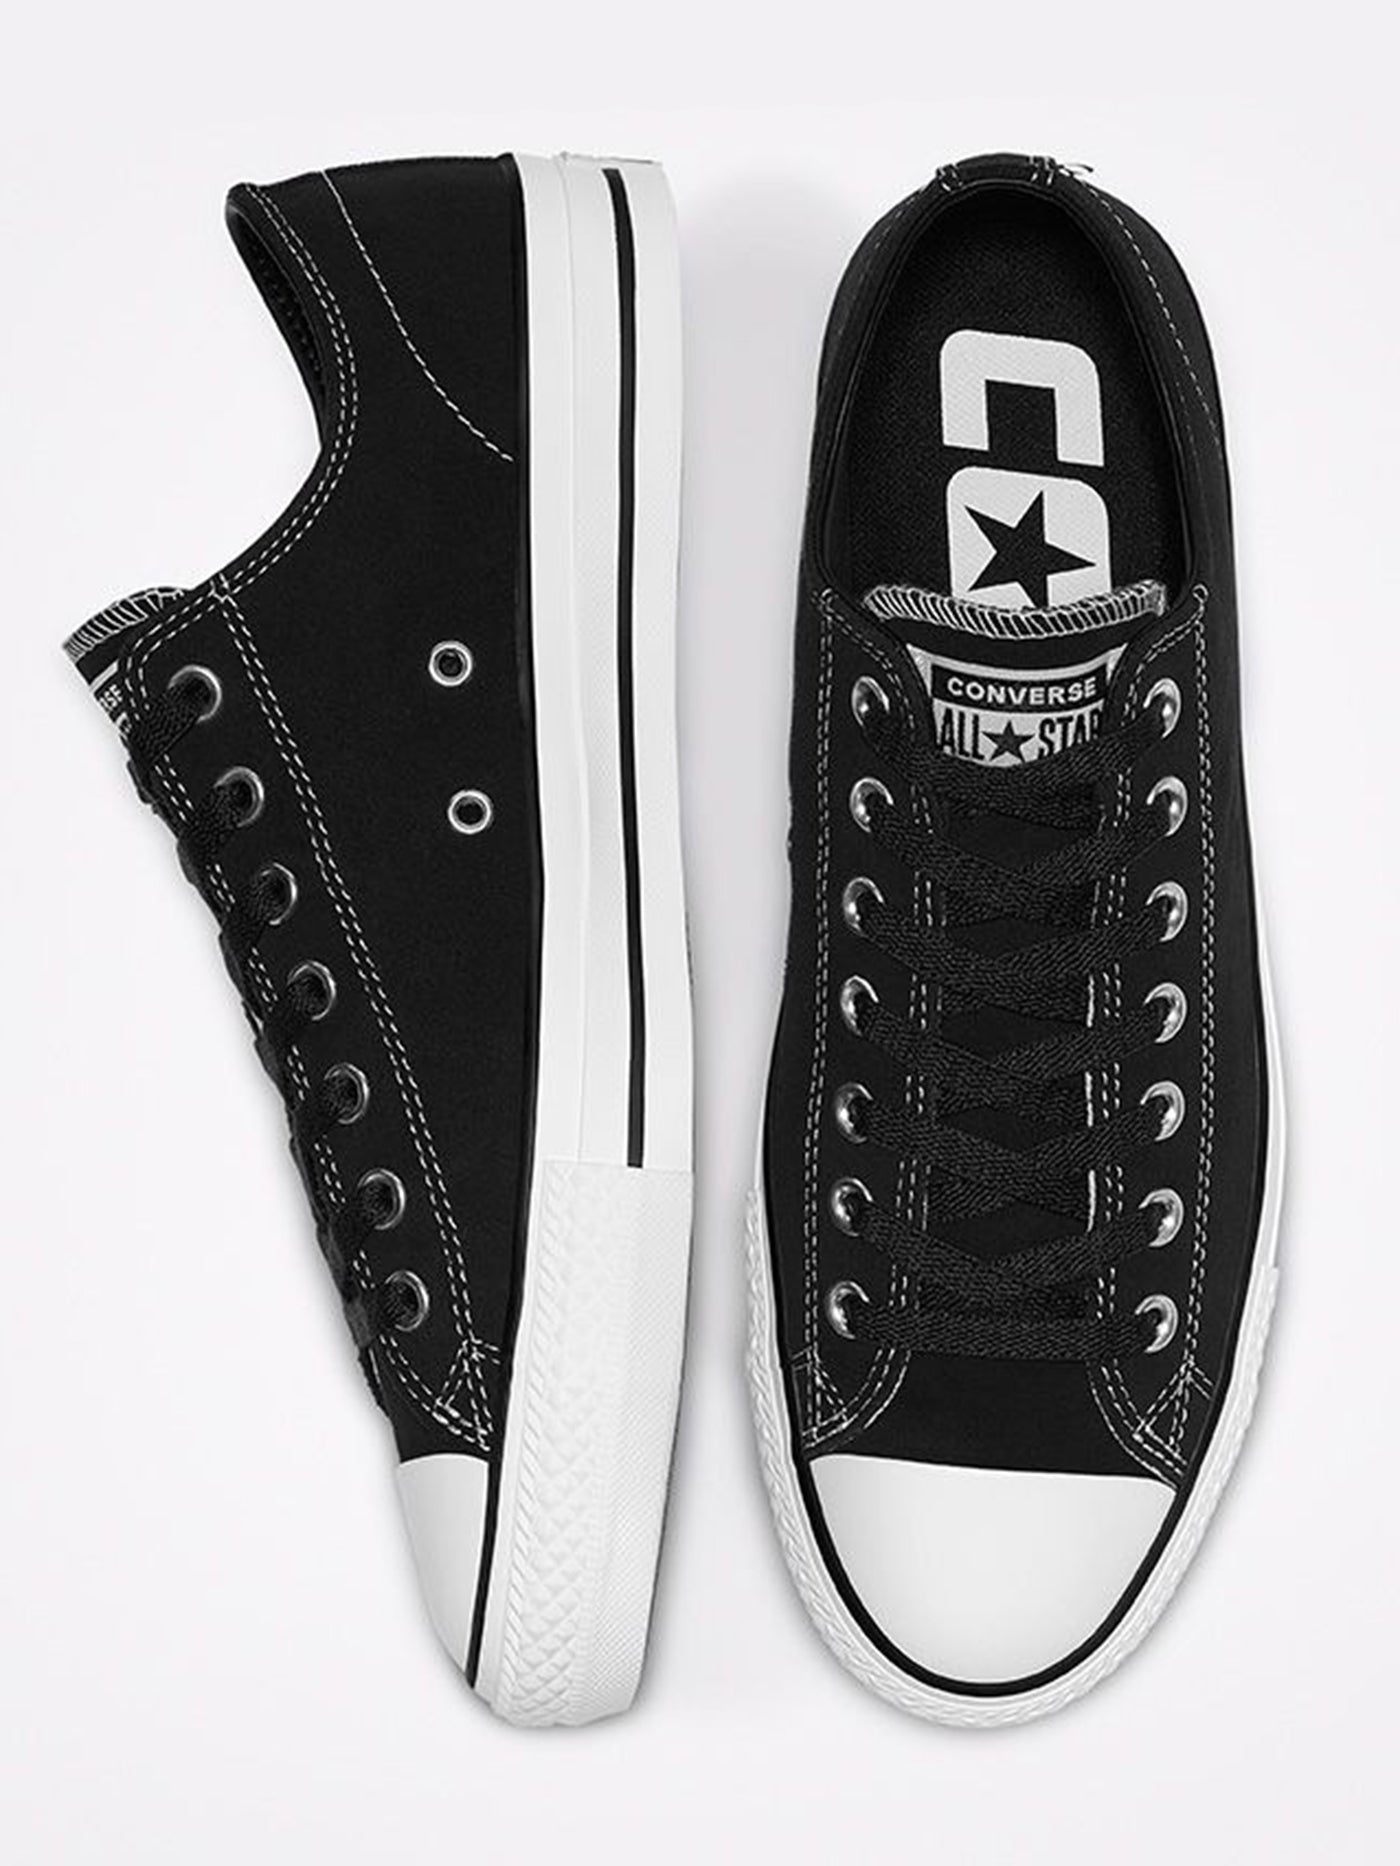 Converse Chuck Taylor All Star OX Black/Black/White Shoes